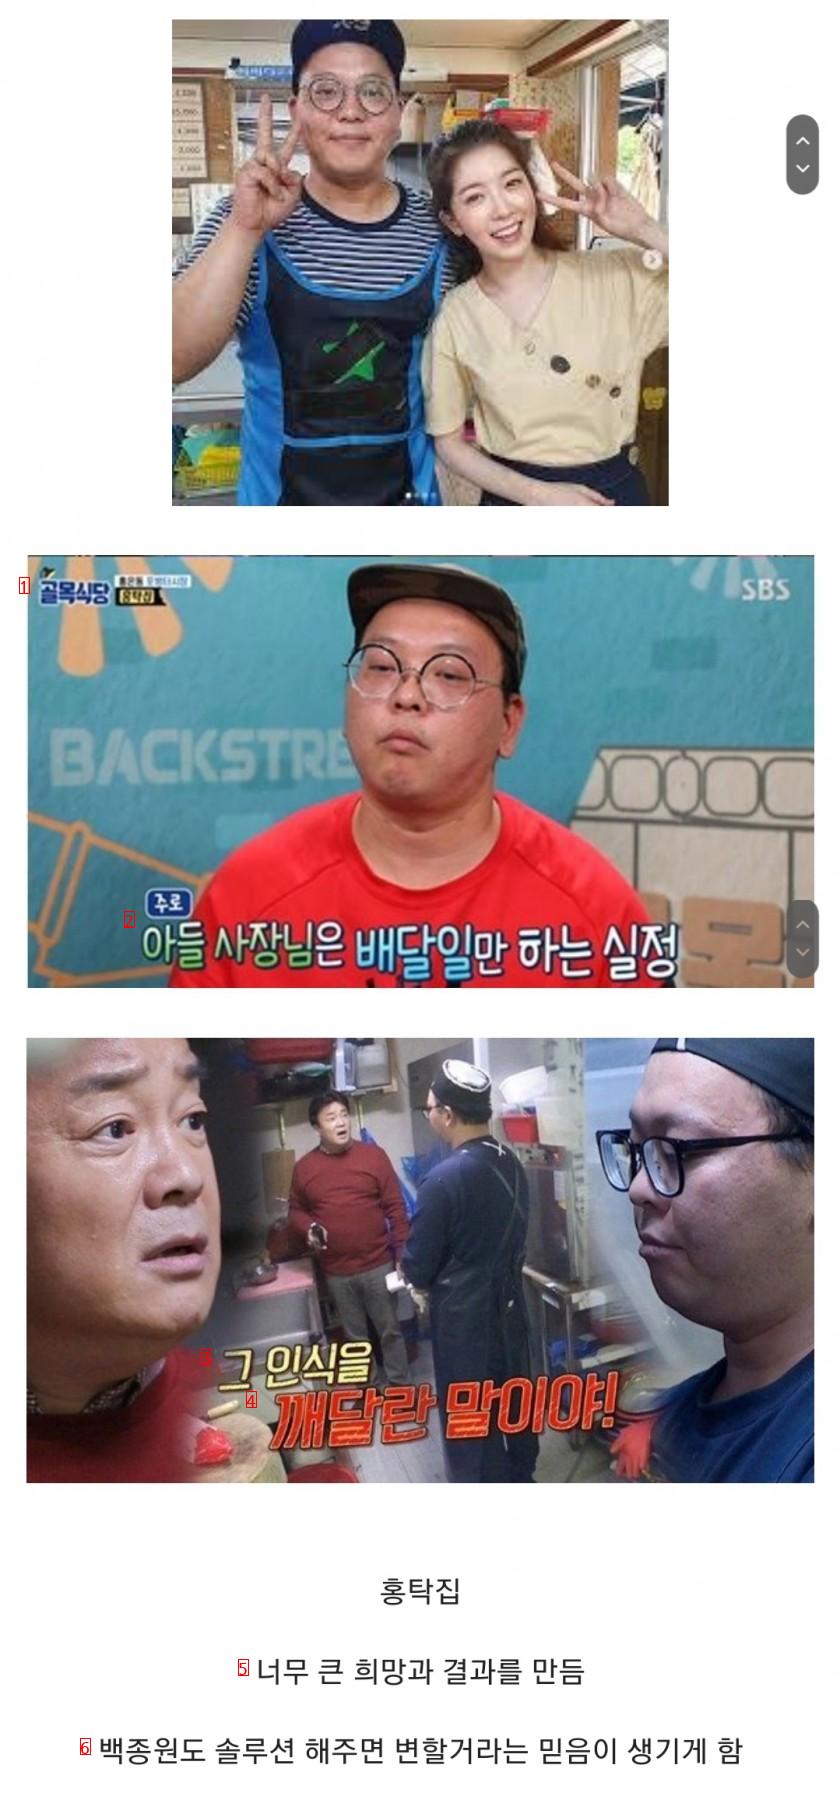 The man who made Jongwon Baek suffer in hope